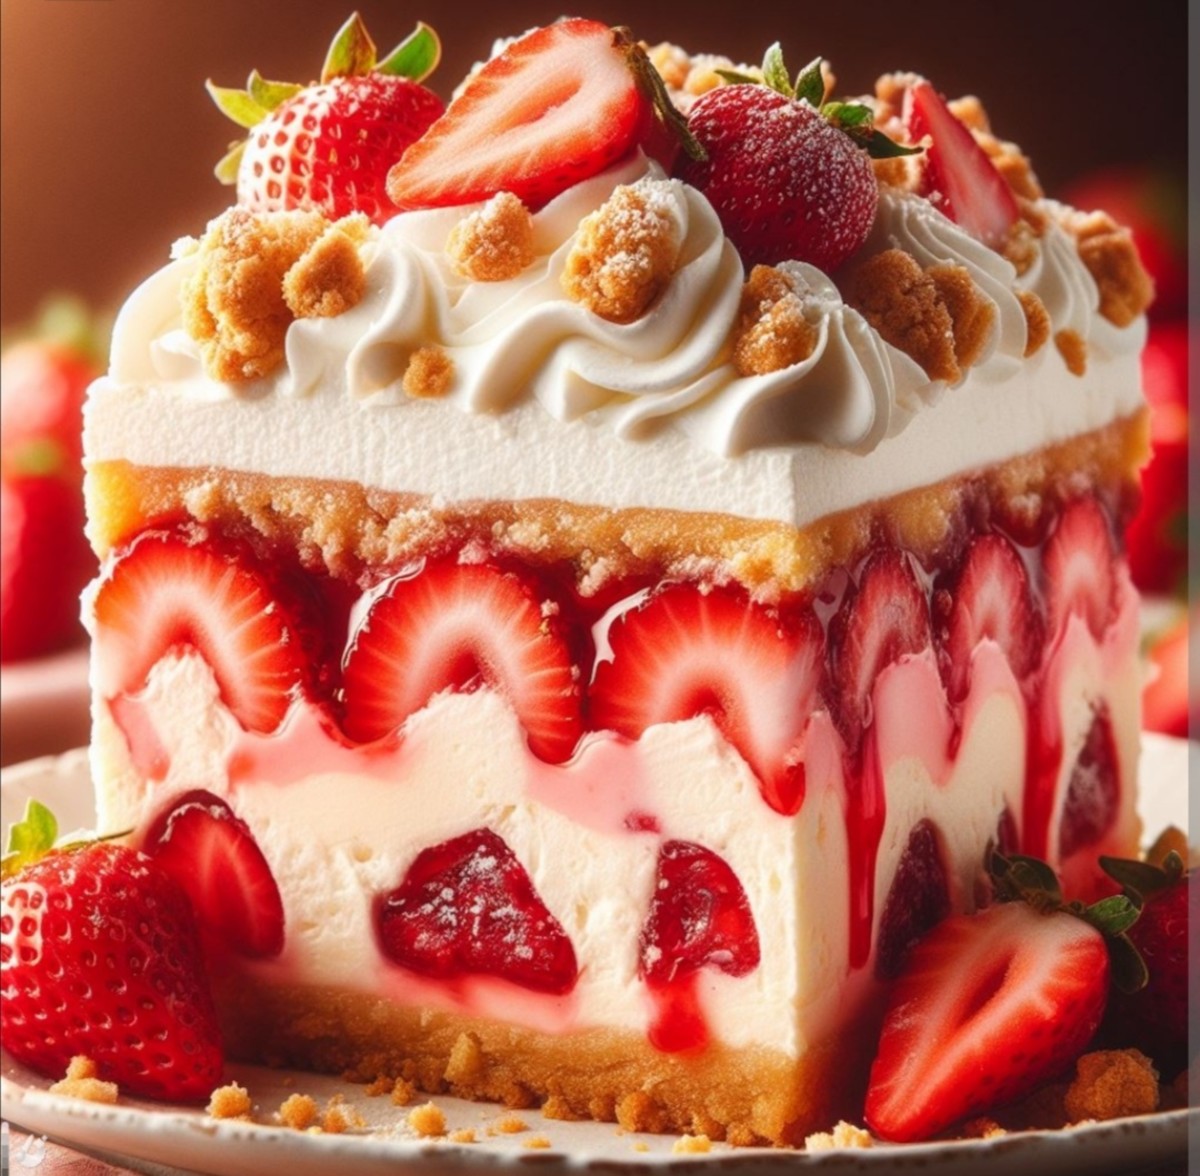 How to Make Strawberry Cheesecake Dump Cake Step by Step